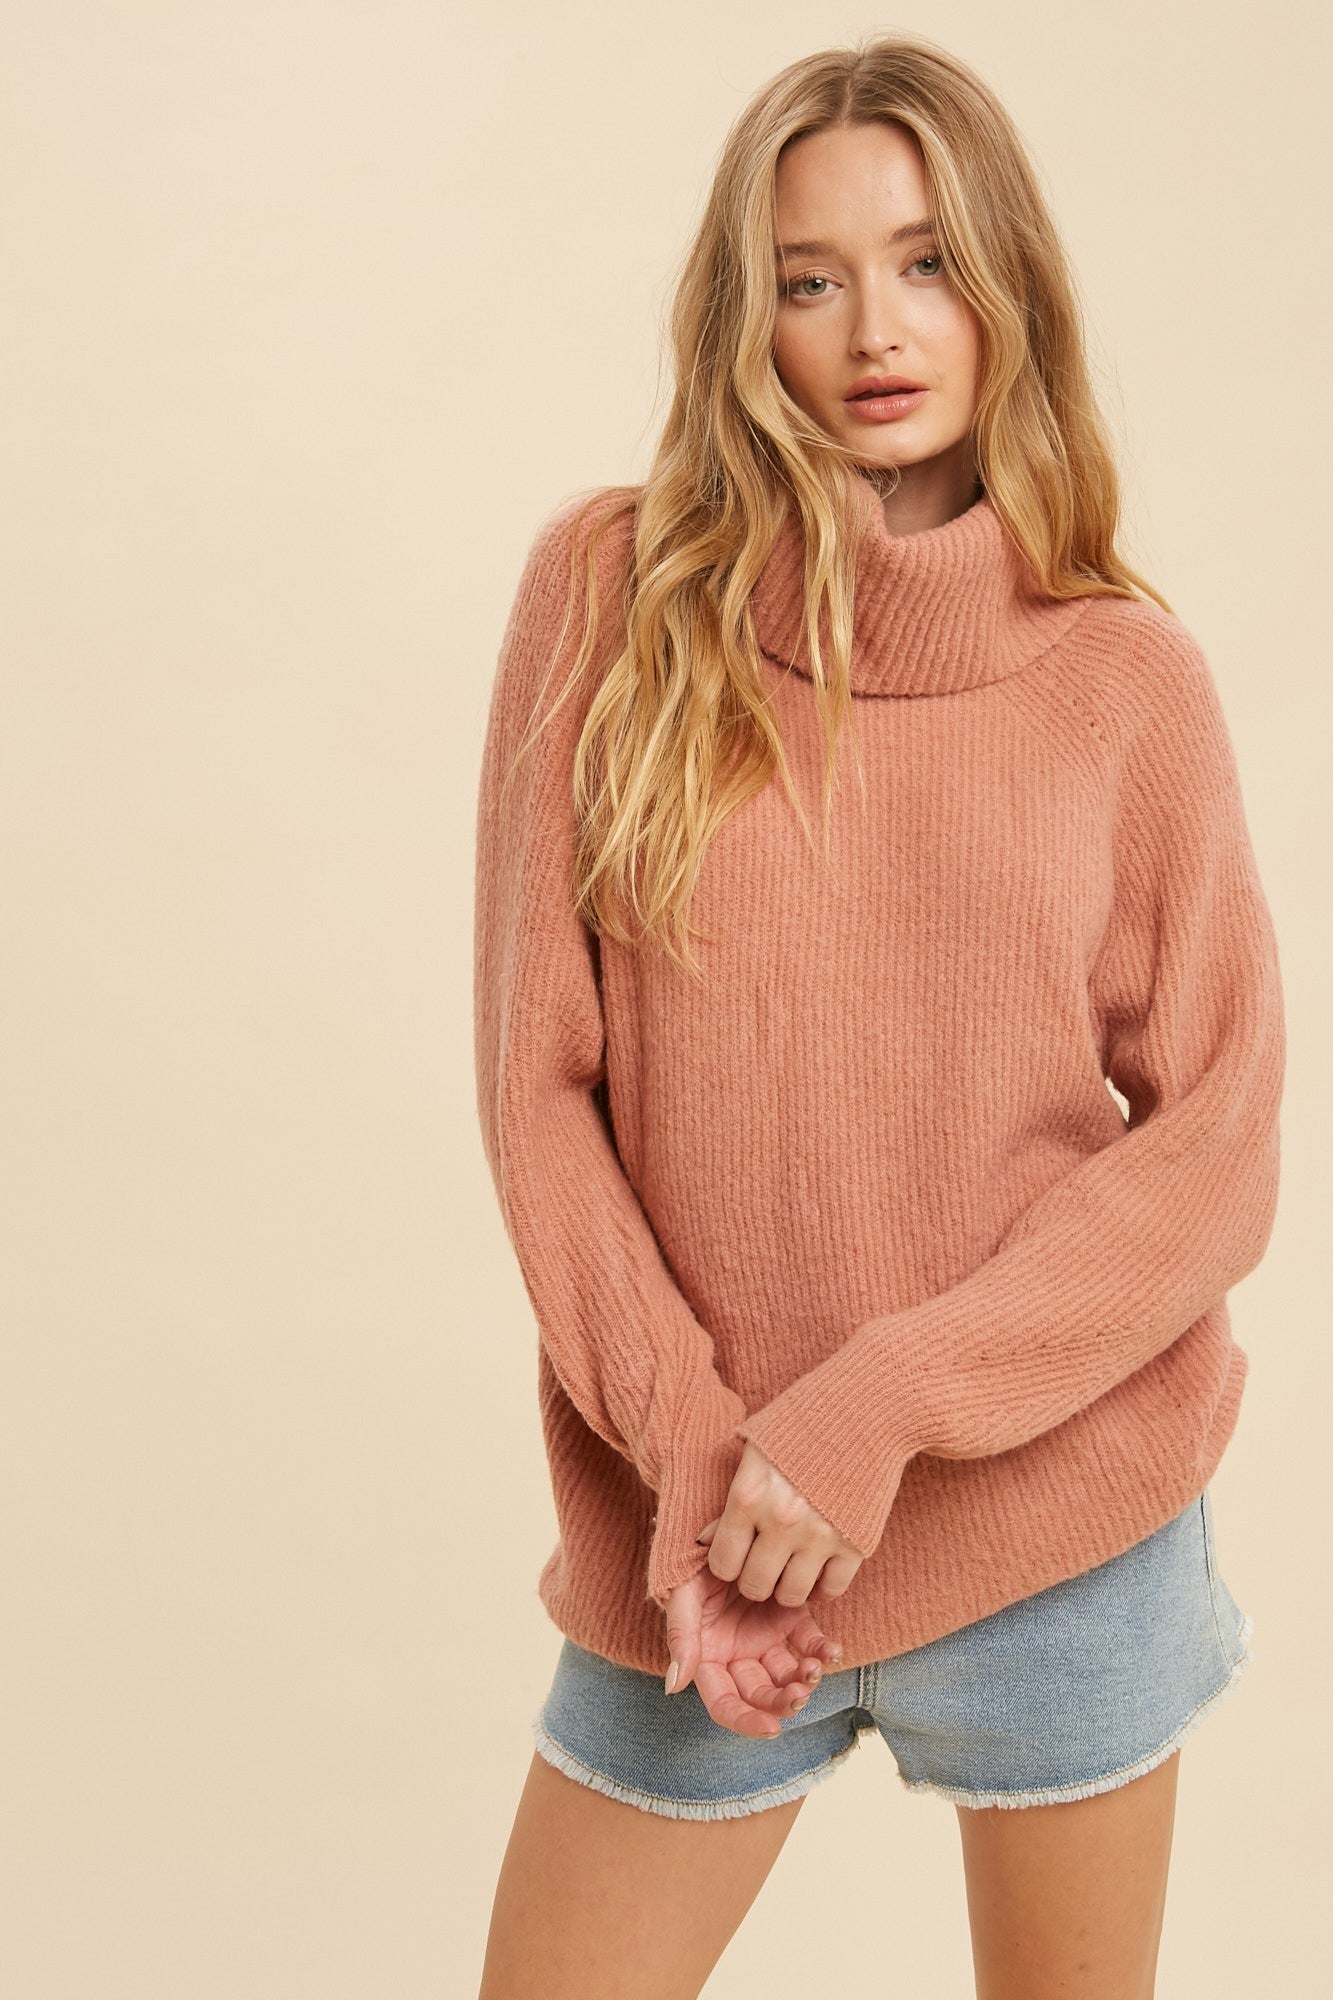 Tara Sweater